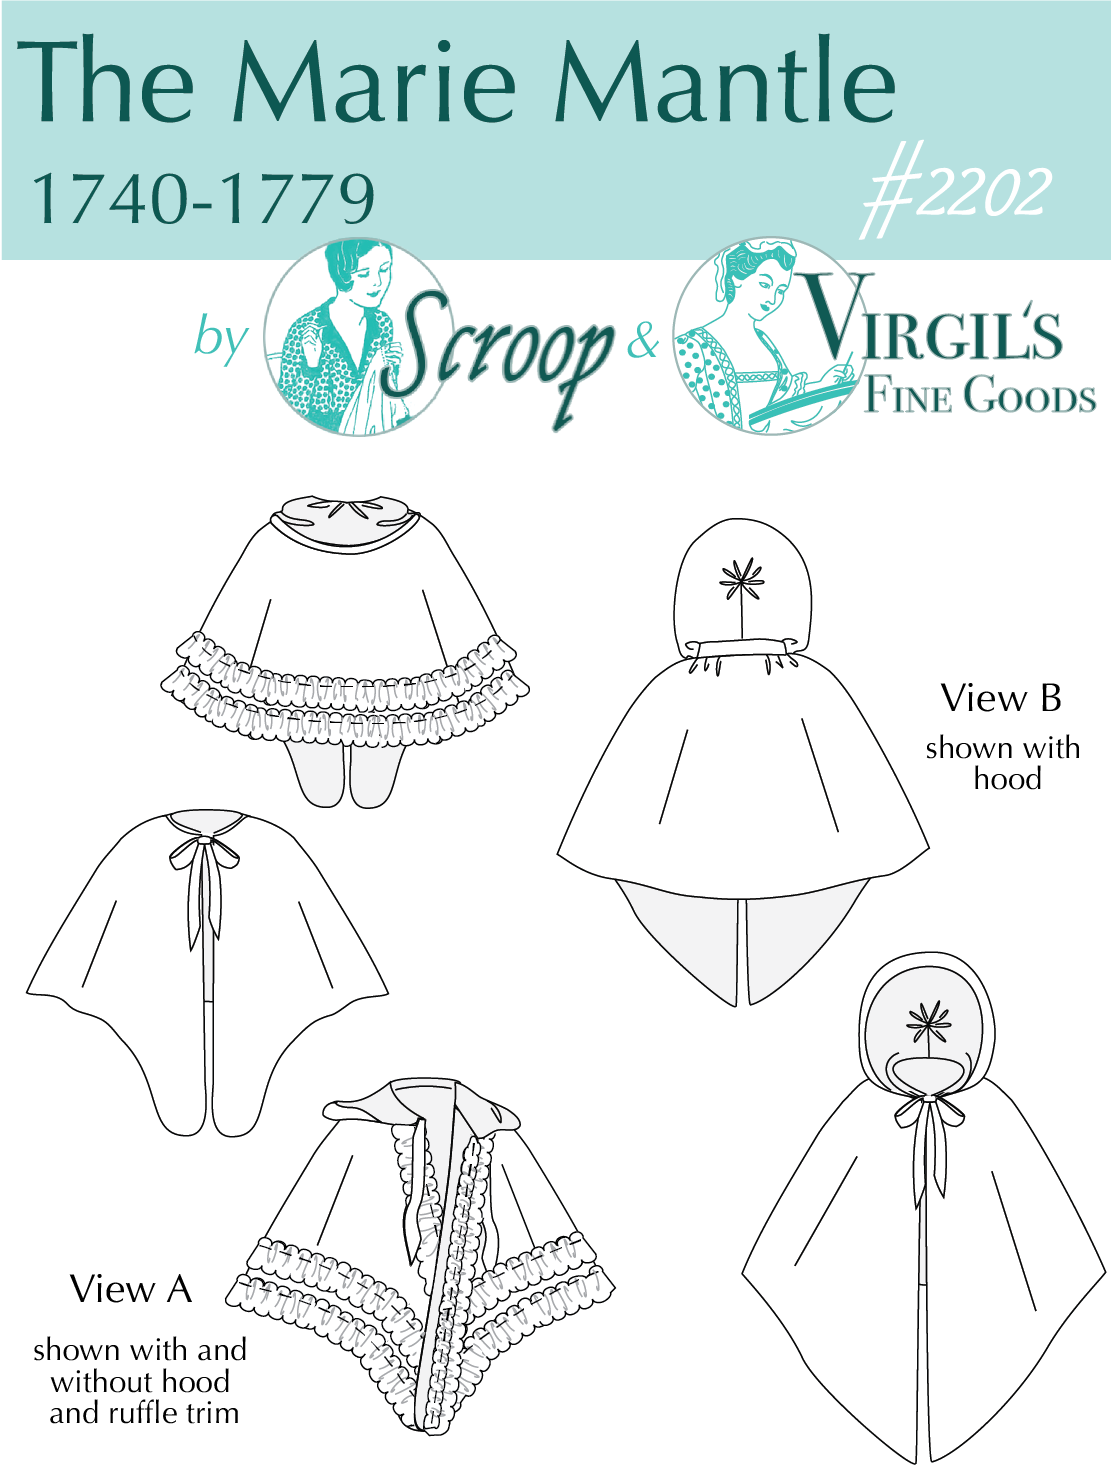 Scroop + Virgils Fine Goods 18th C Mantle Patterns scrooppatterns.com